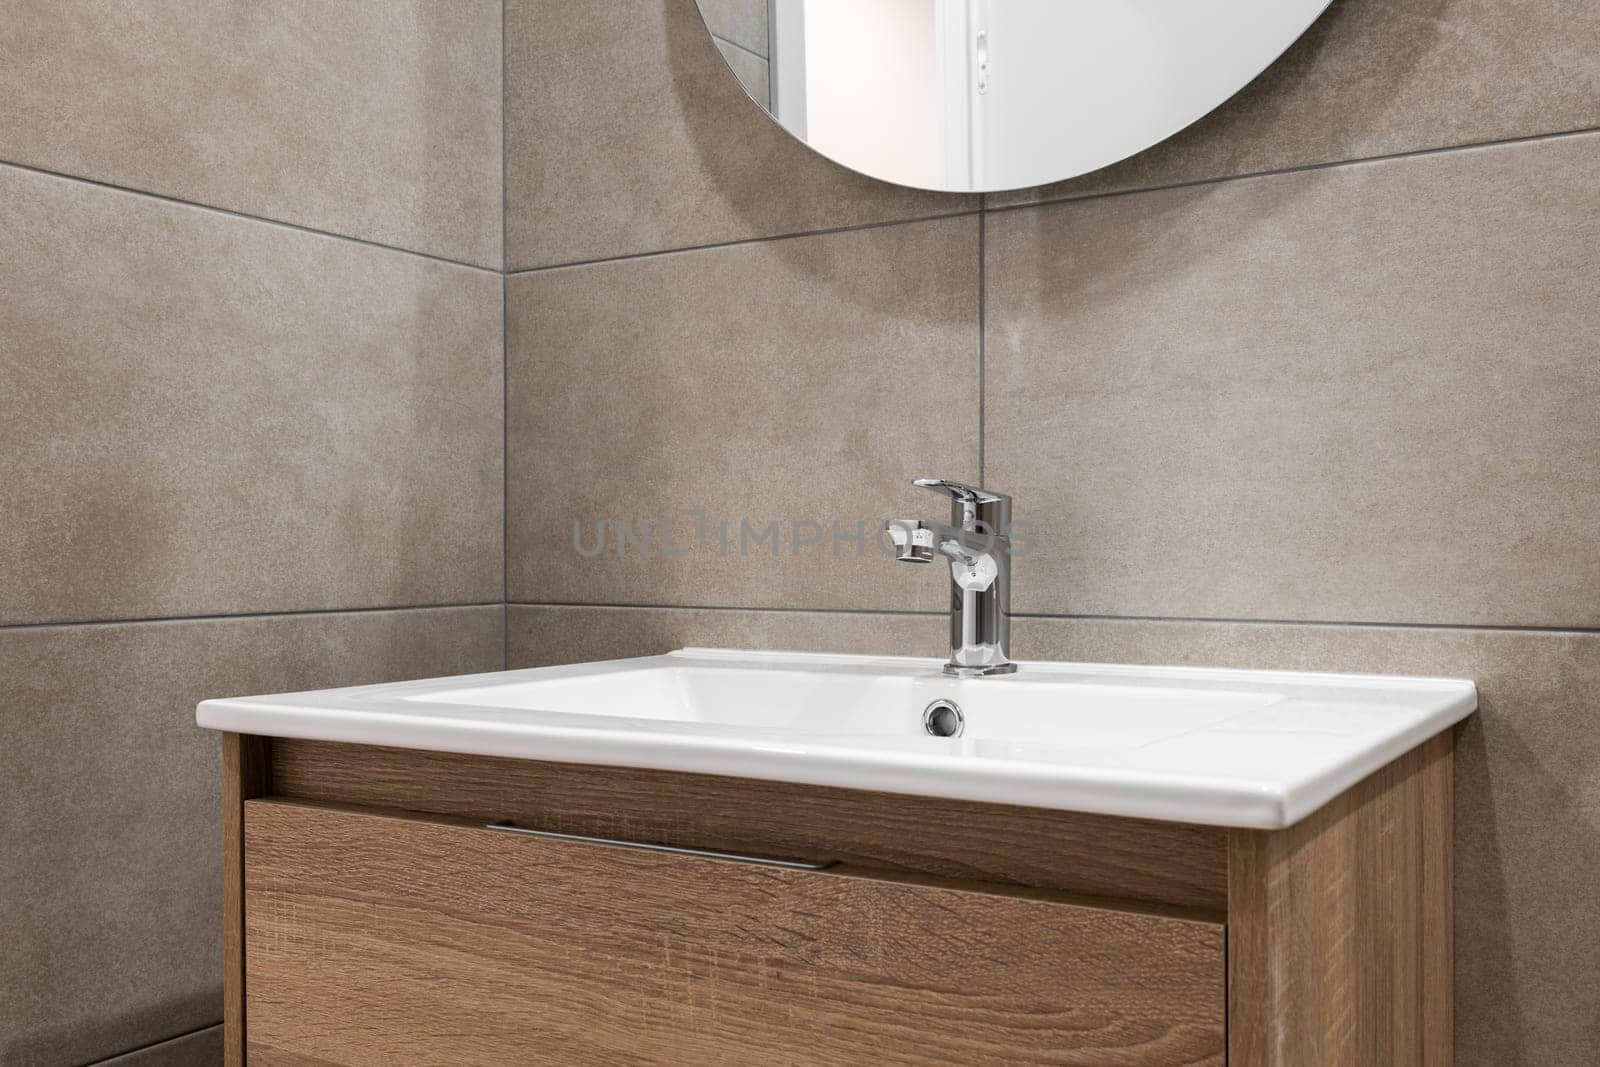 Modern minimalist bathroom interior with stone grey tiles, wooden furniture, white sink and round mirror. Spa bathroom concept by apavlin